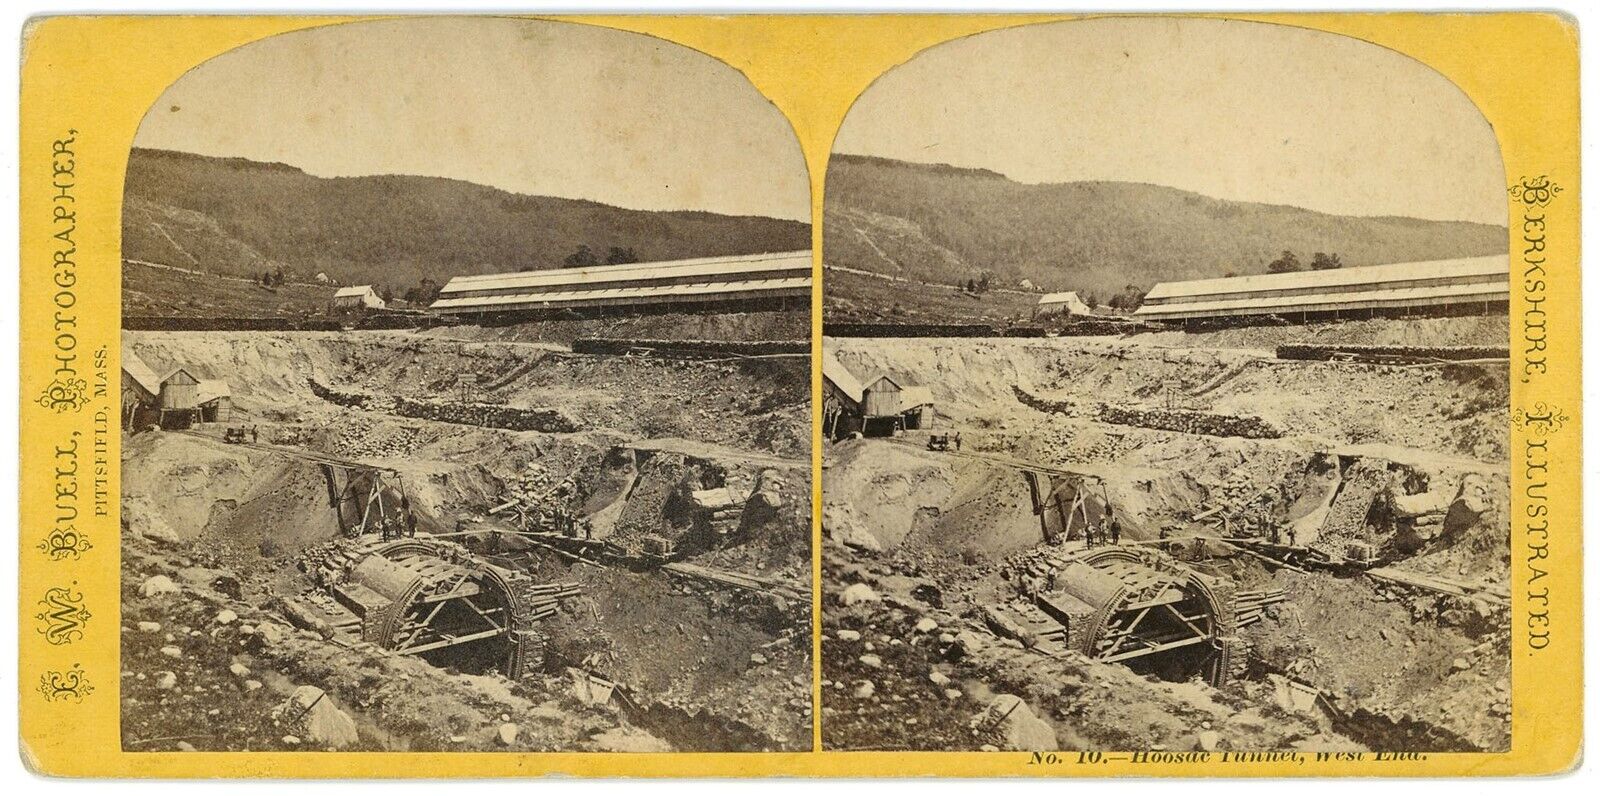 MASSACHUSETTS SV - Hoosac Tunnel - West End - EW Buell 1860s